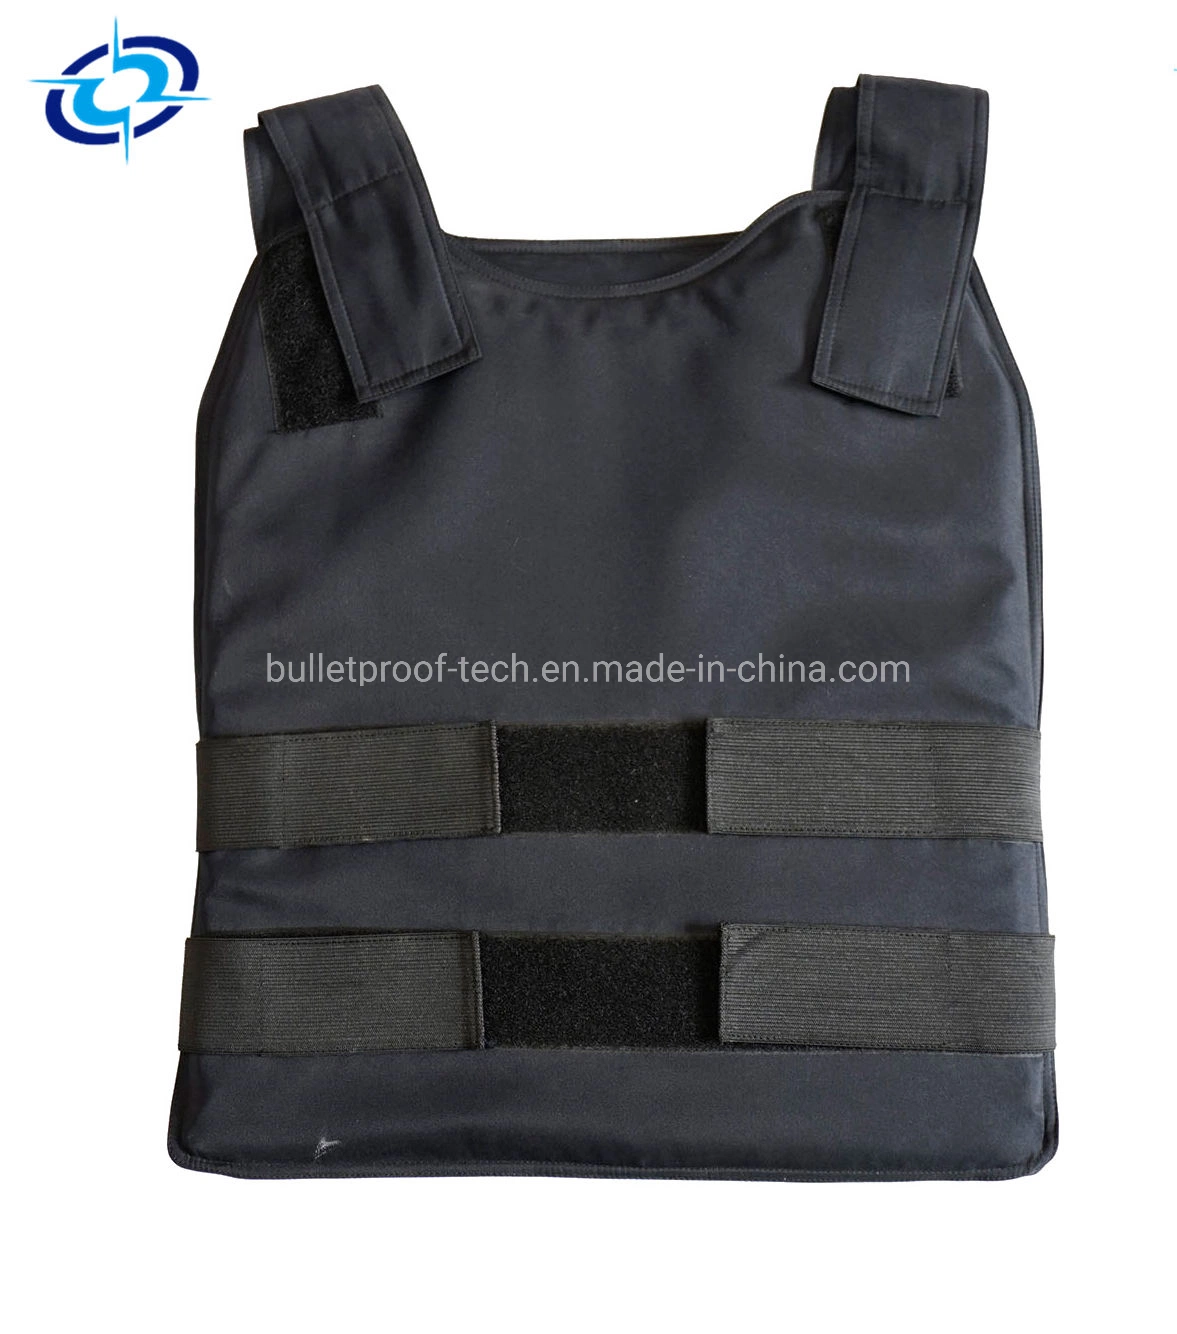 Wholesale Assault Tactical Security Defence Military Bulletproof Vest/Jacket